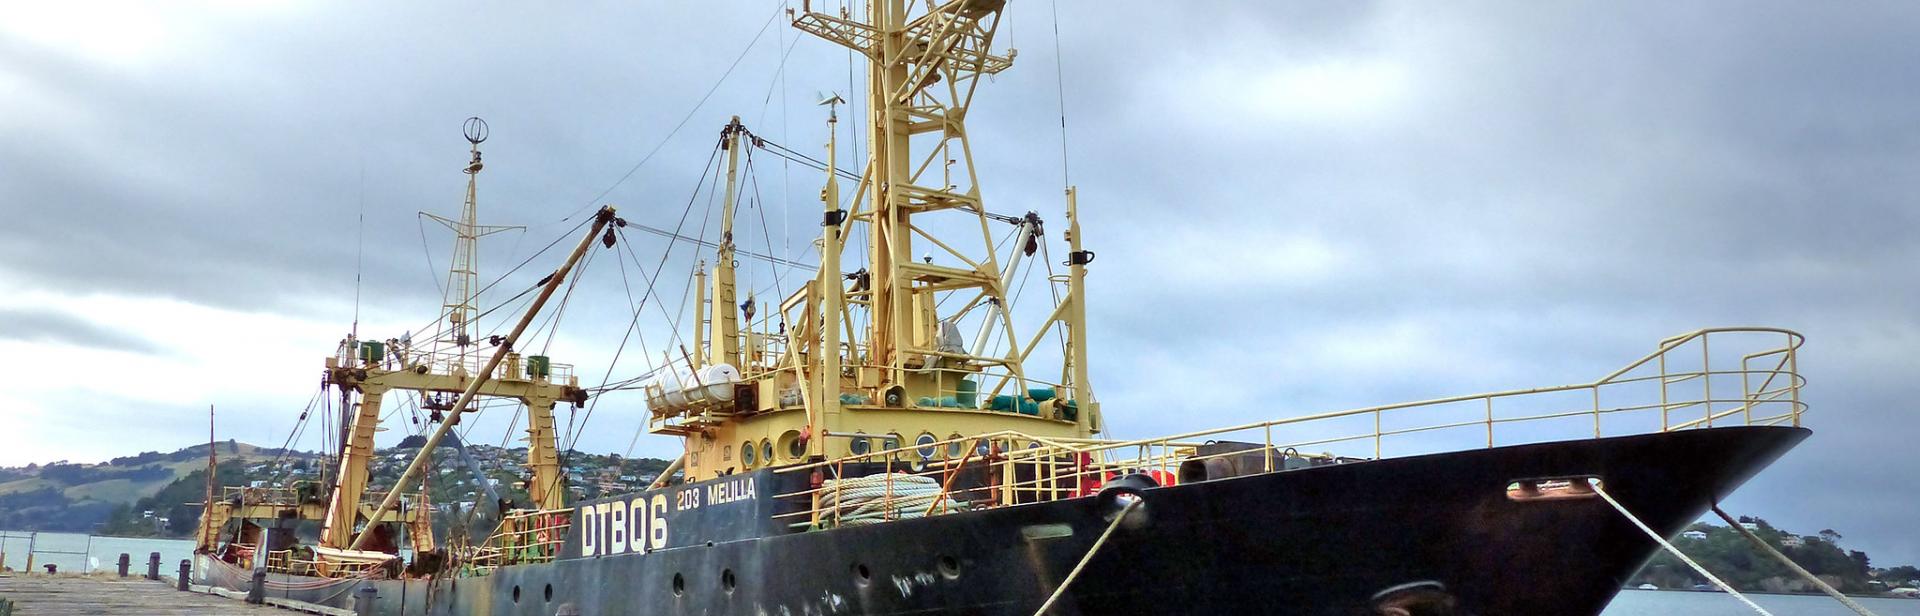 a seized fishing trawler